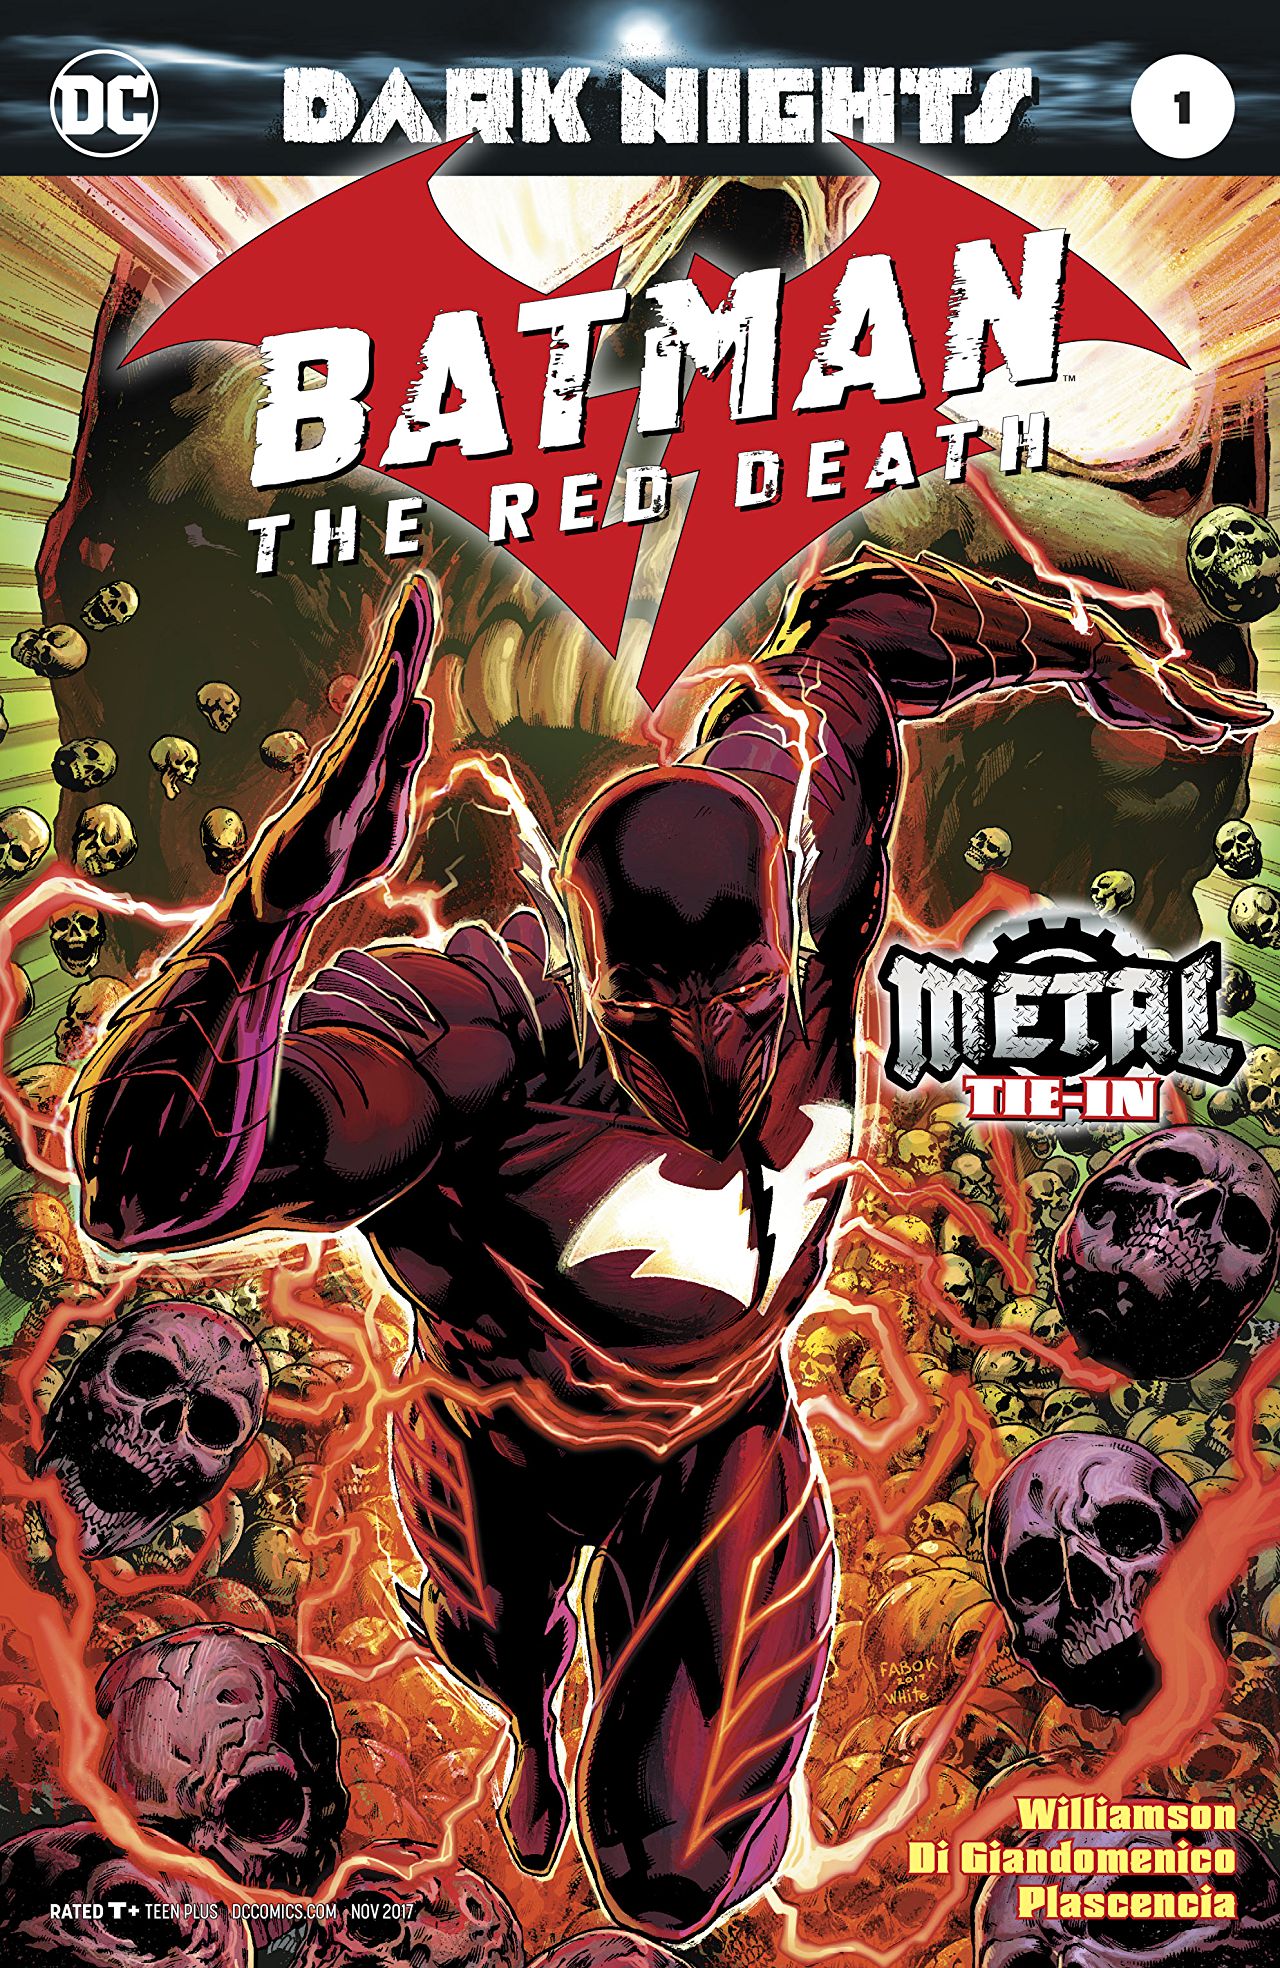 BATMAN: THE RED DEATH